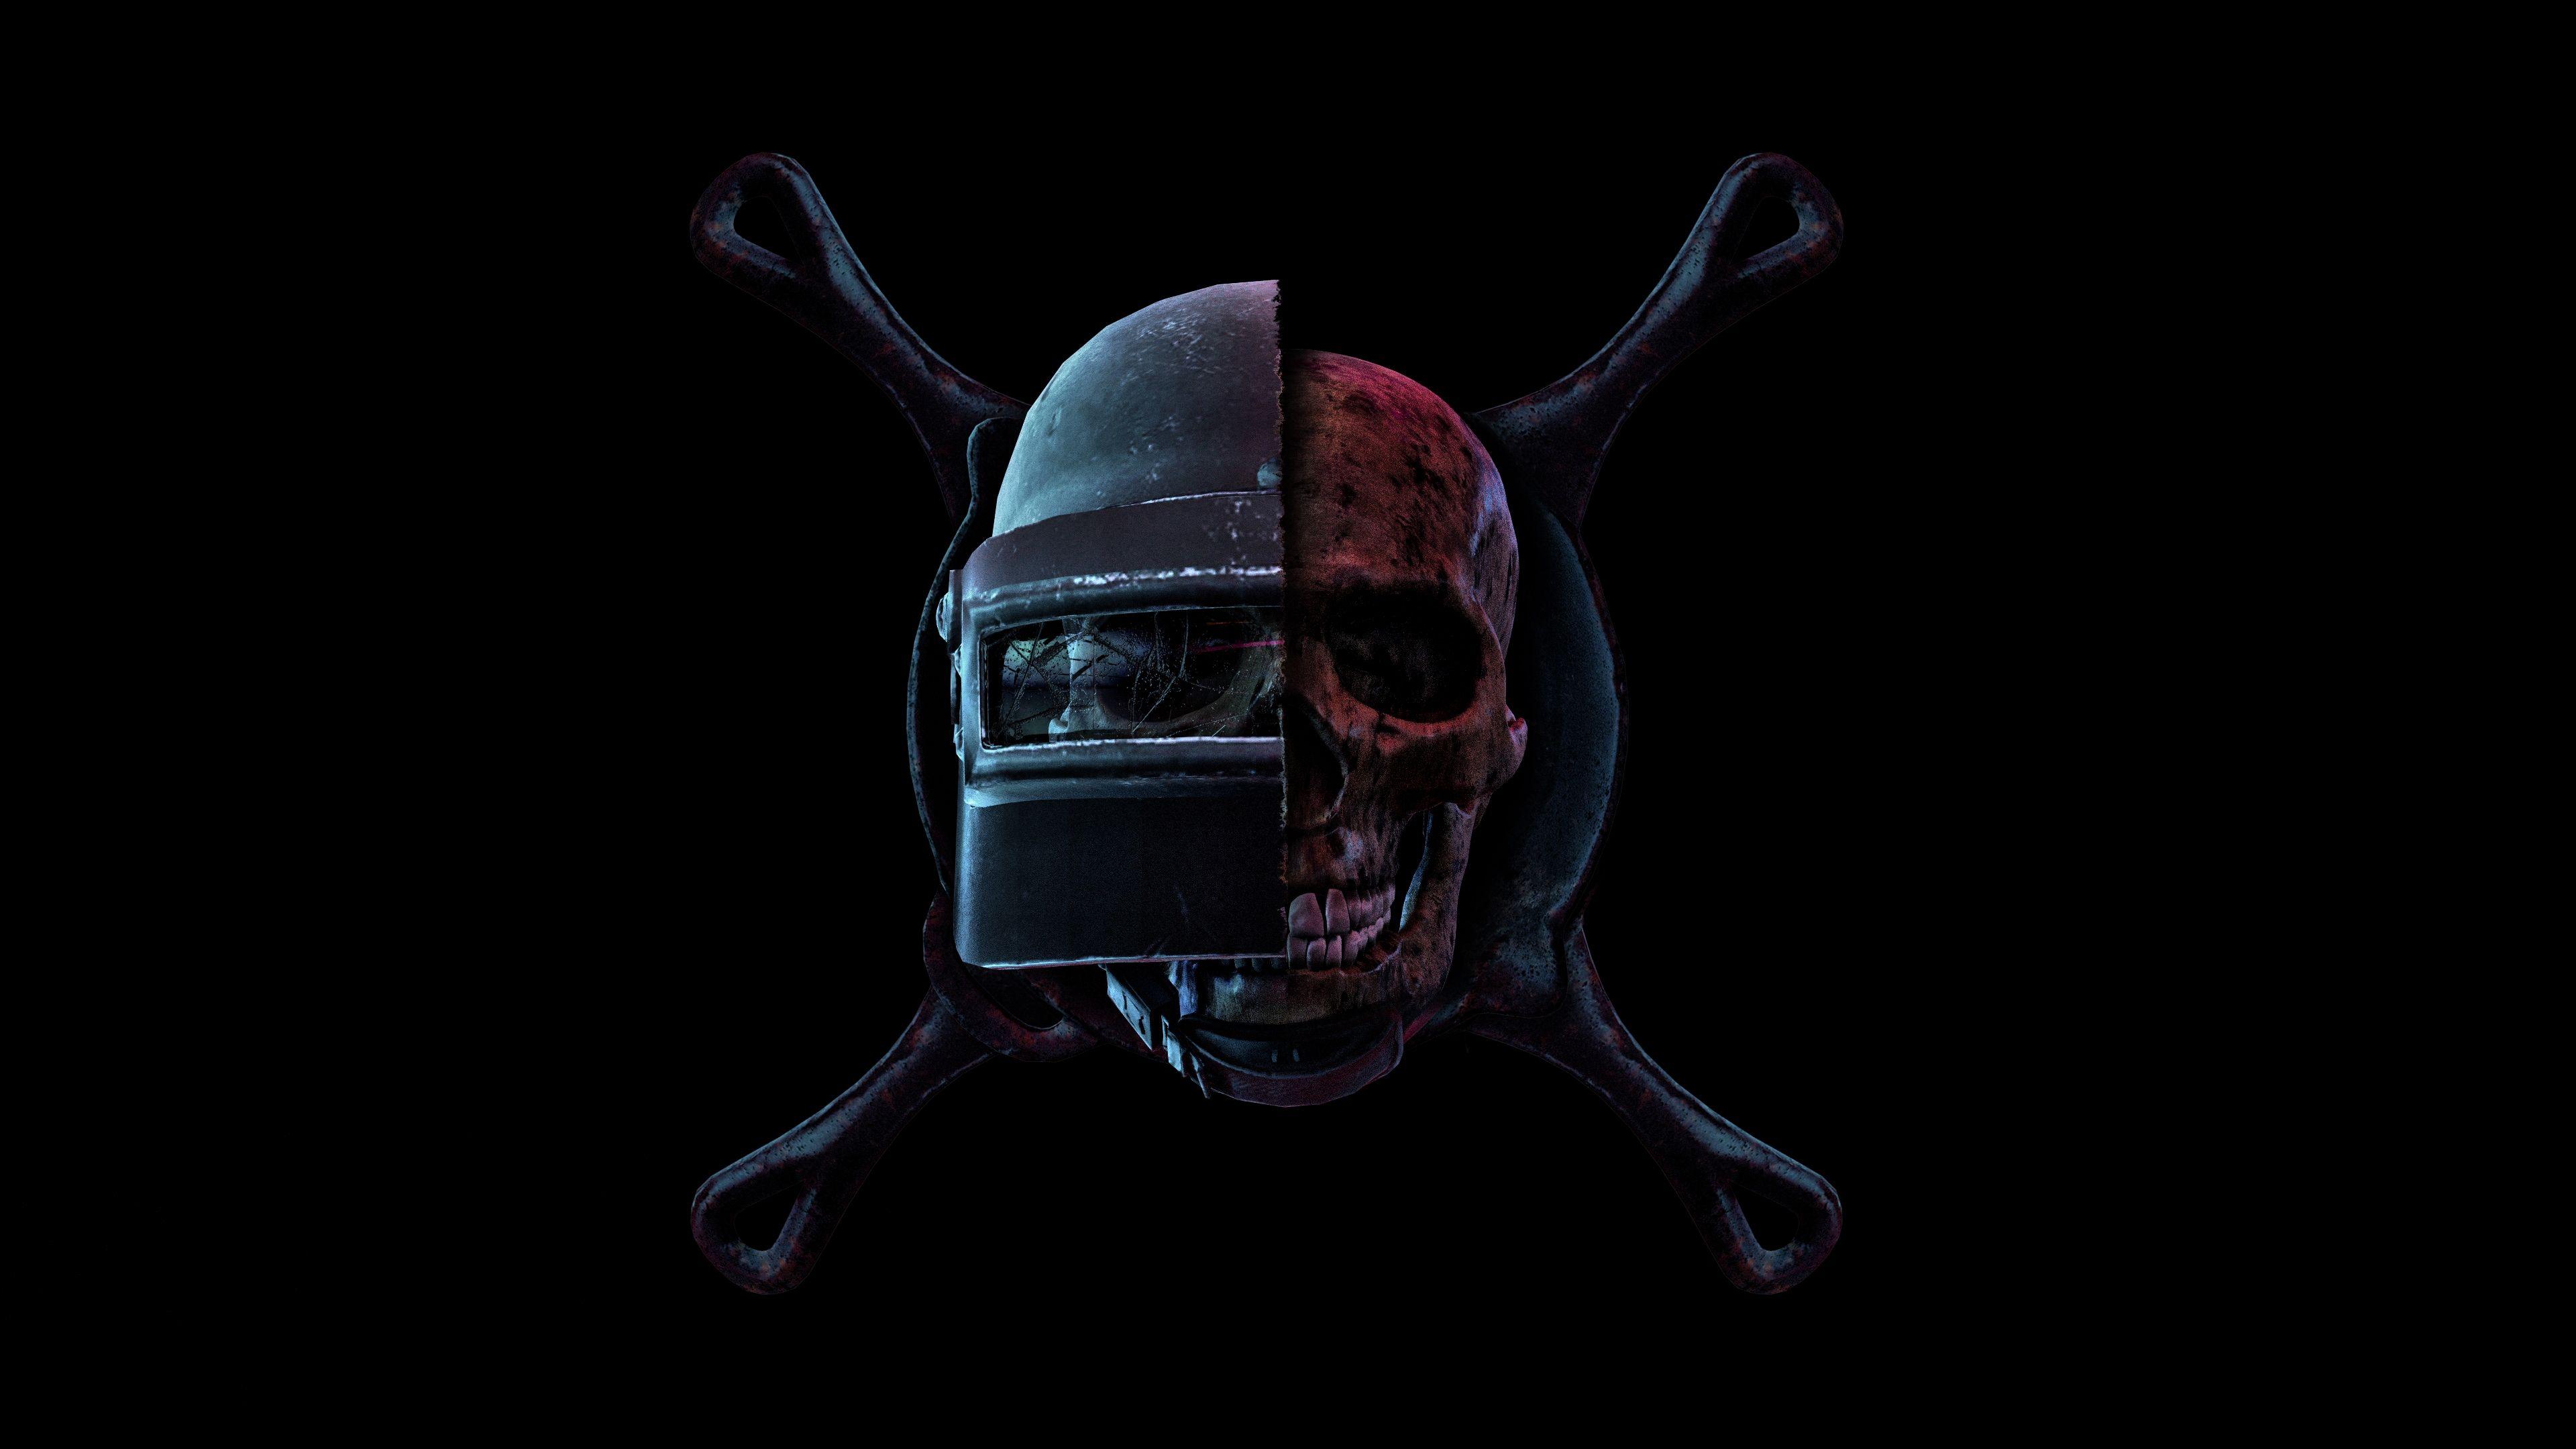 PUBG Skull Helmet Pan PlayerUnknown's Battlegrounds 4K Wallpaper PlayerUnknown's Battlegrounds (PUBG) 4k wallpaper. Skull helmet, Helmet, Mobile logo